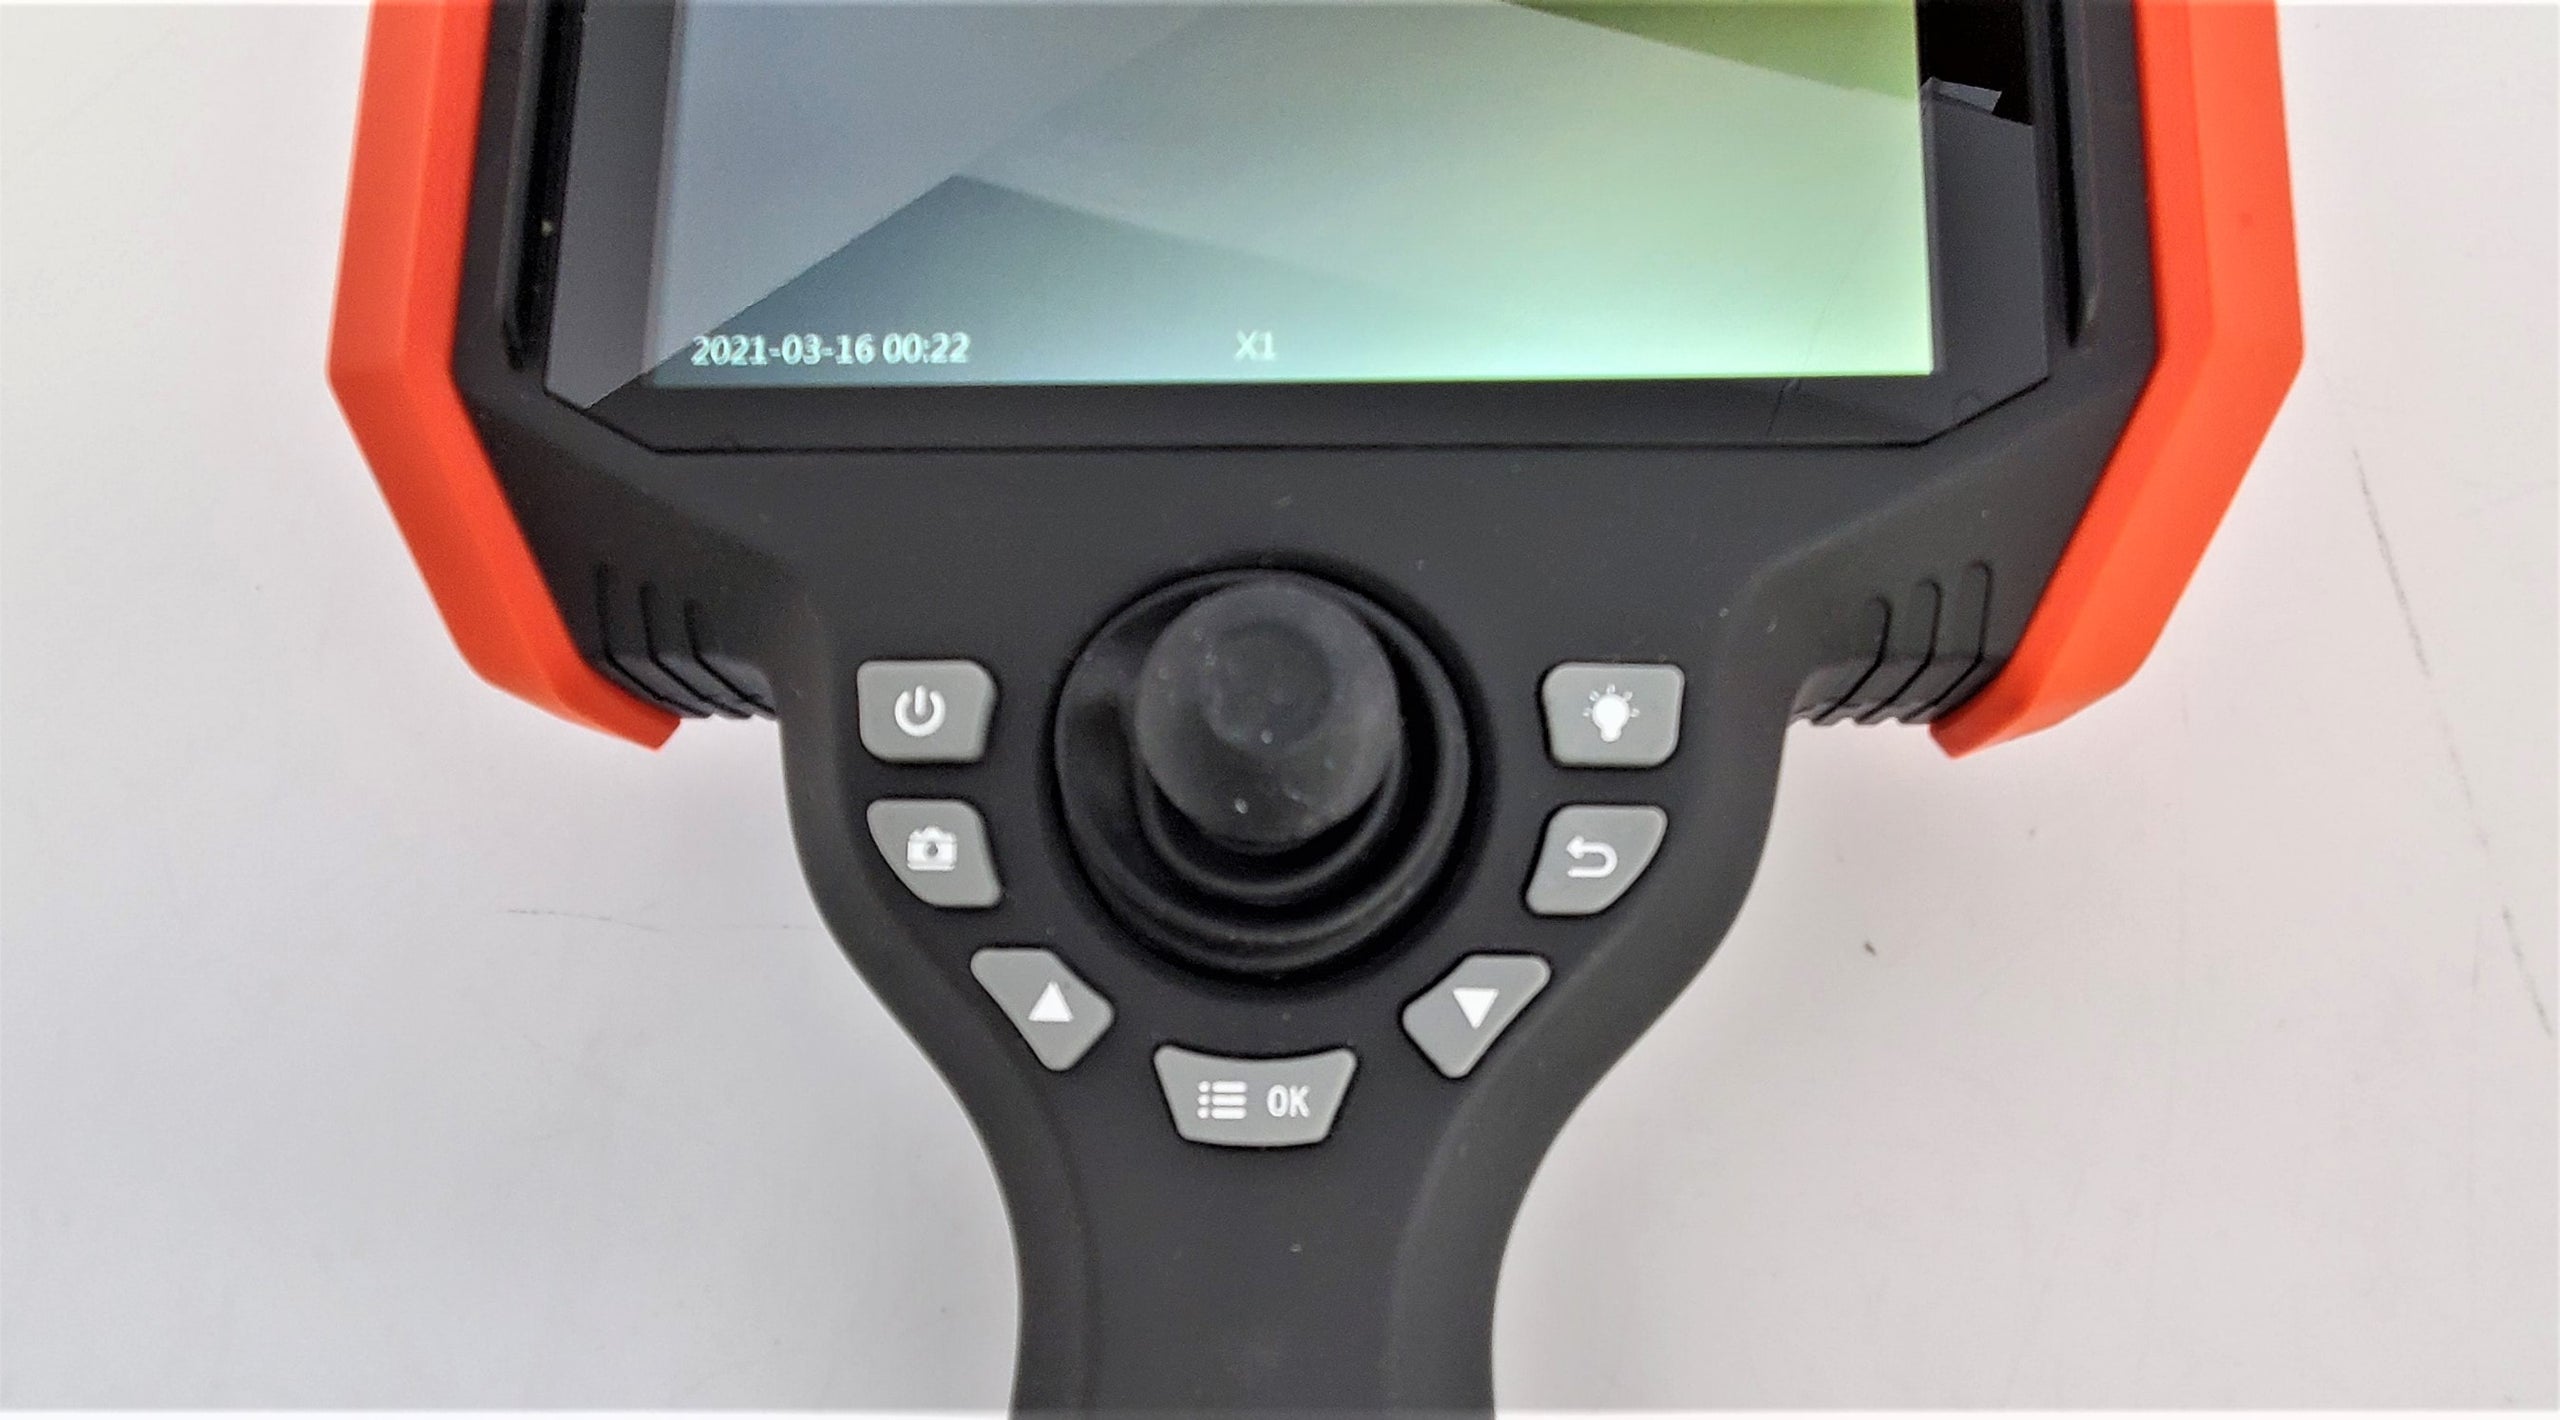 Vividia DA-2812 high quality automotive joystick articulating inspection  camera borescope videoscope and industrial endoscope with 2.8mm diameter  probe